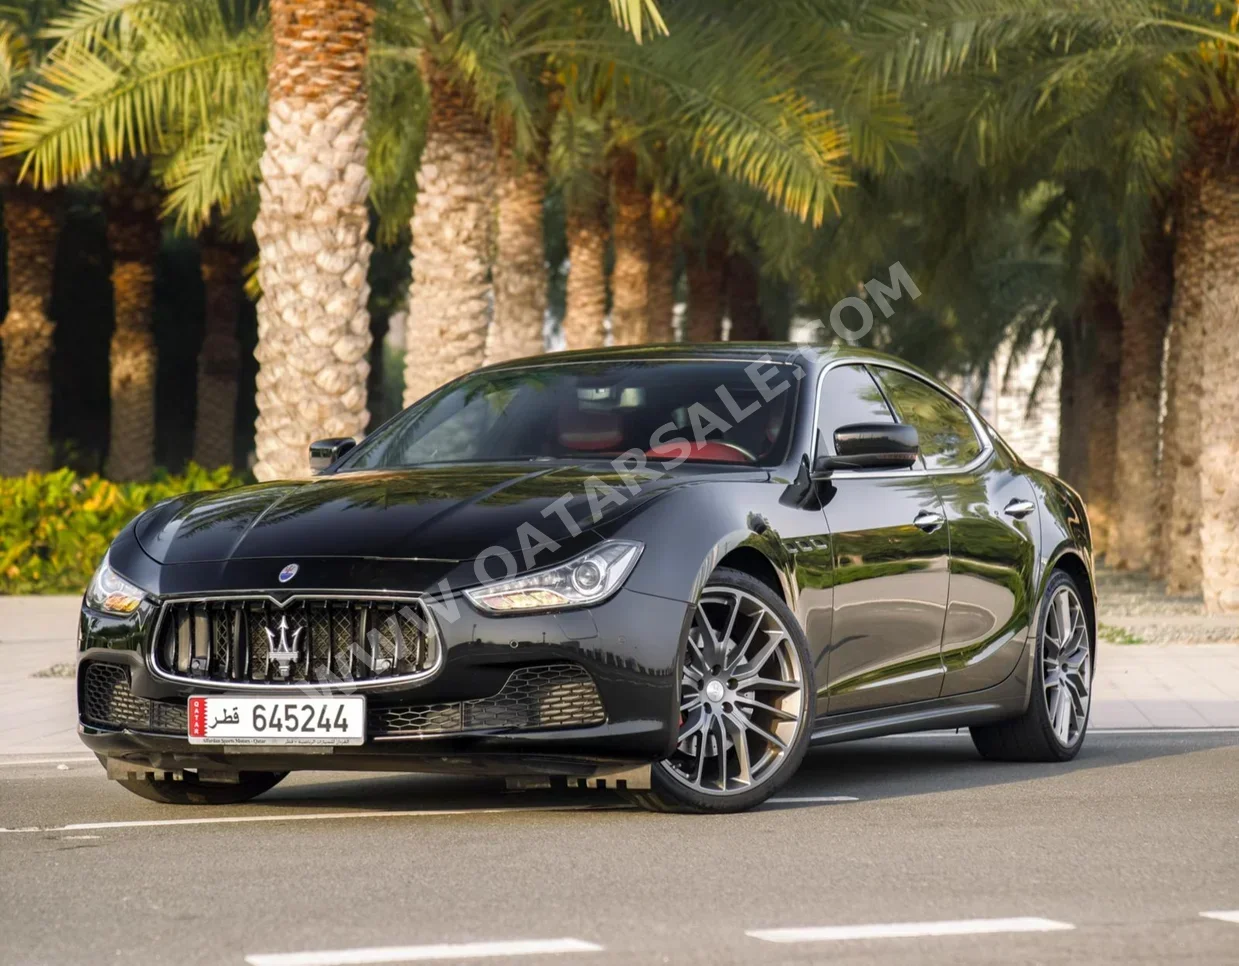 Maserati  Ghibli  2016  Automatic  60,000 Km  6 Cylinder  Rear Wheel Drive (RWD)  Sedan  Black